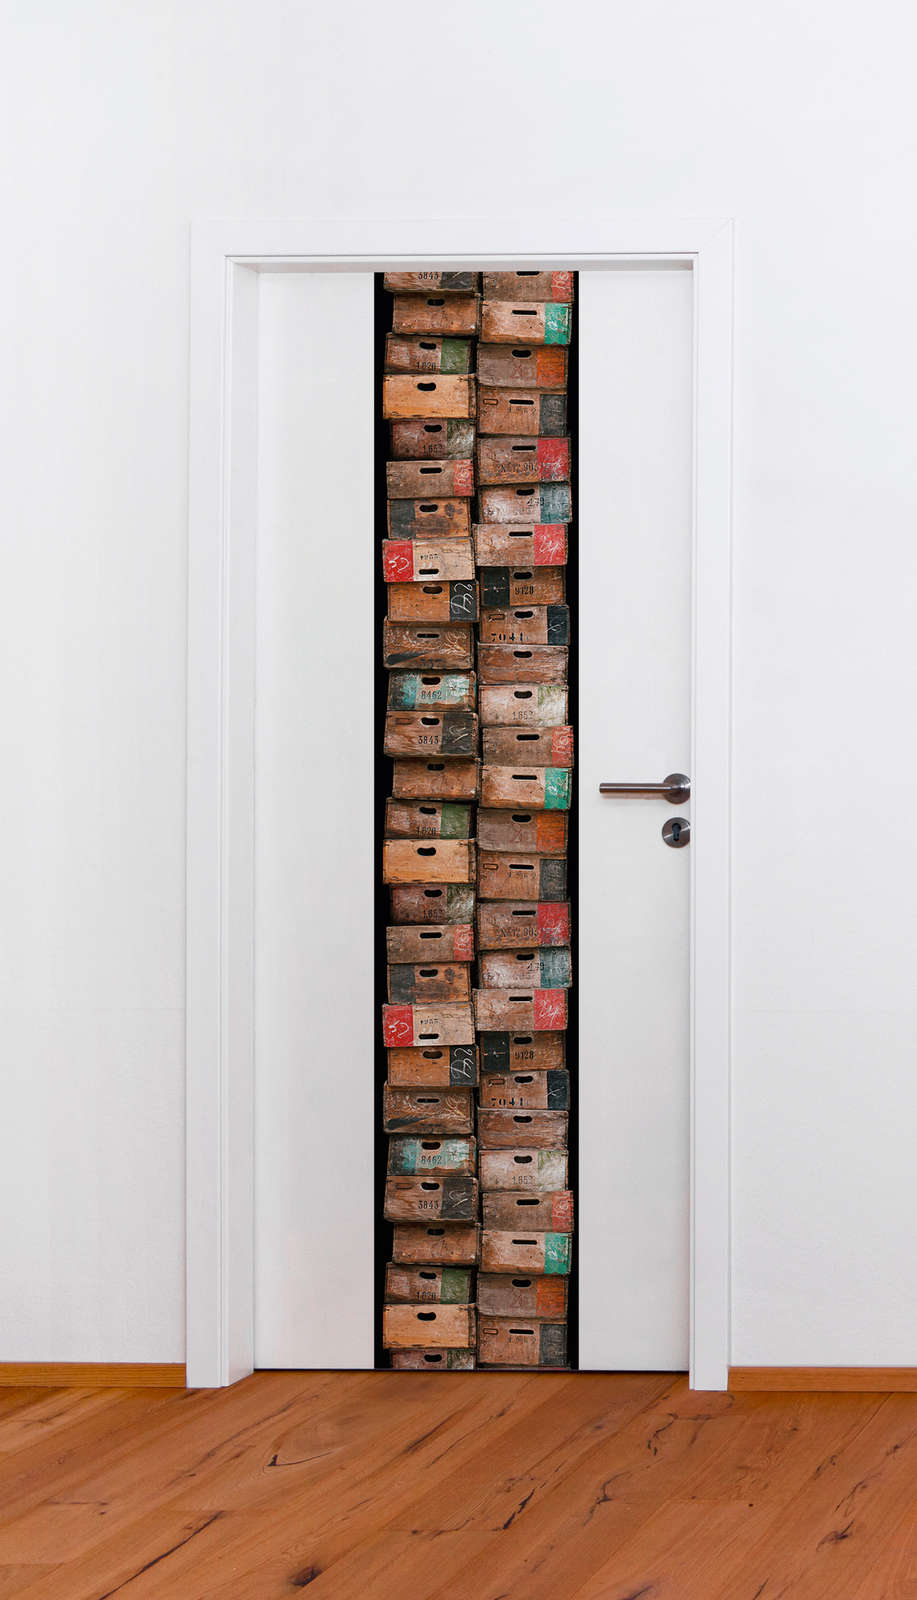             Papel pintado con motivo de cajas de madera rústica en aspecto usado - marrón, colorido
        